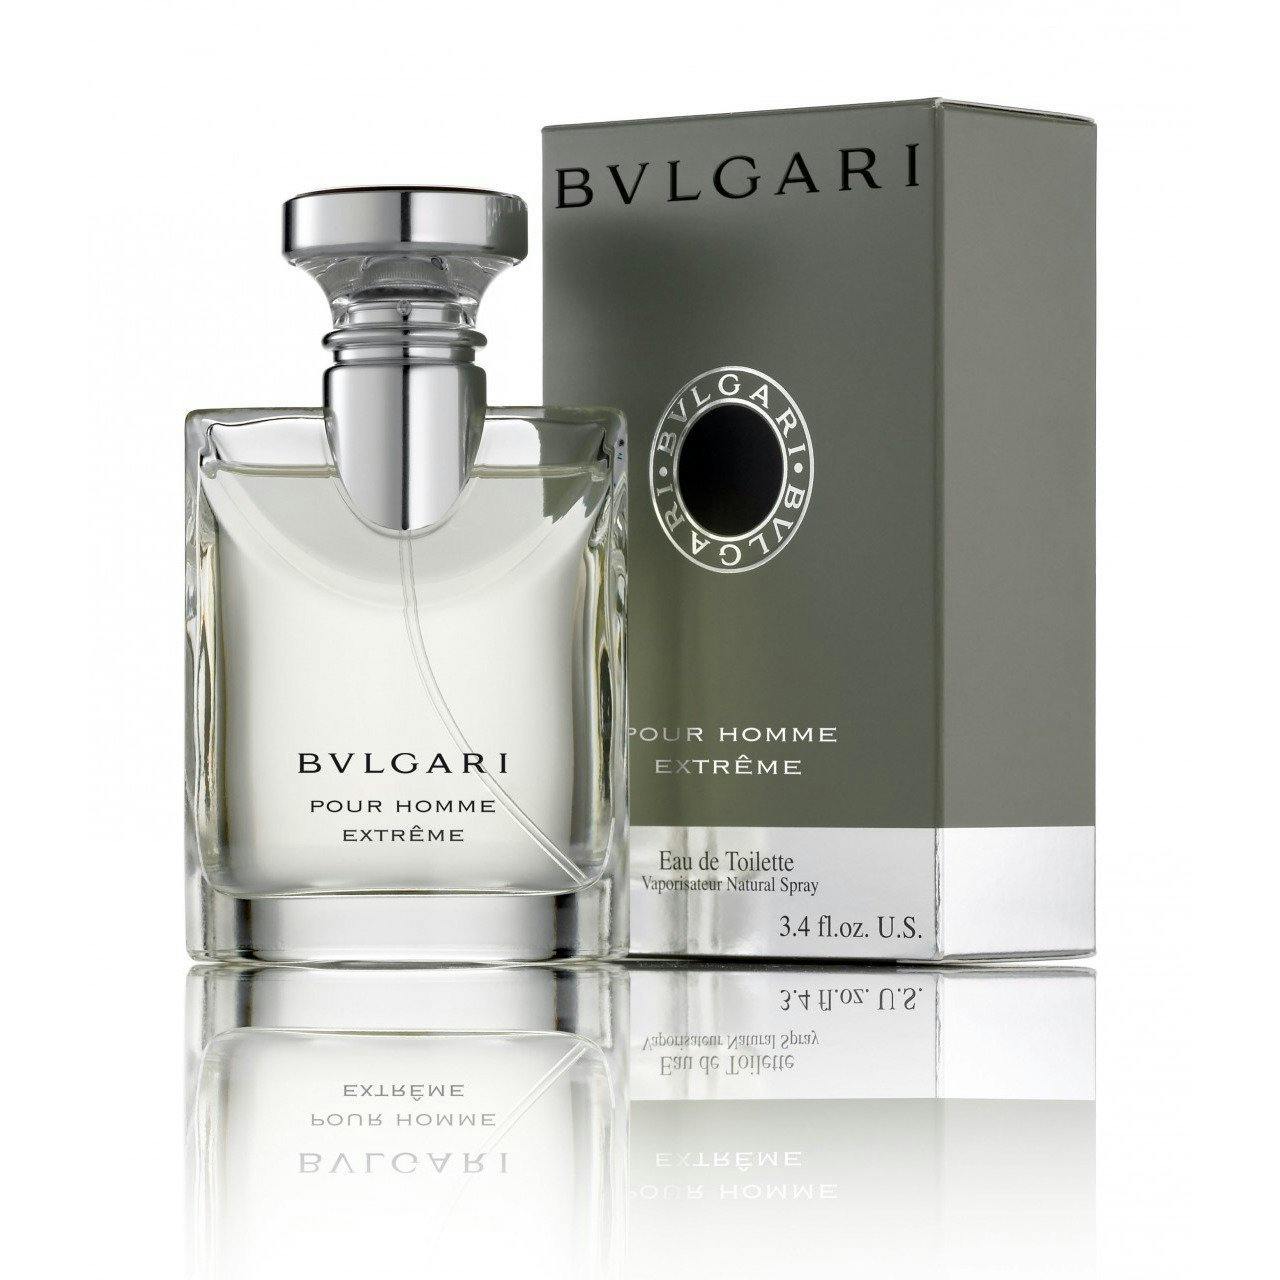 bvlgari perfume extreme